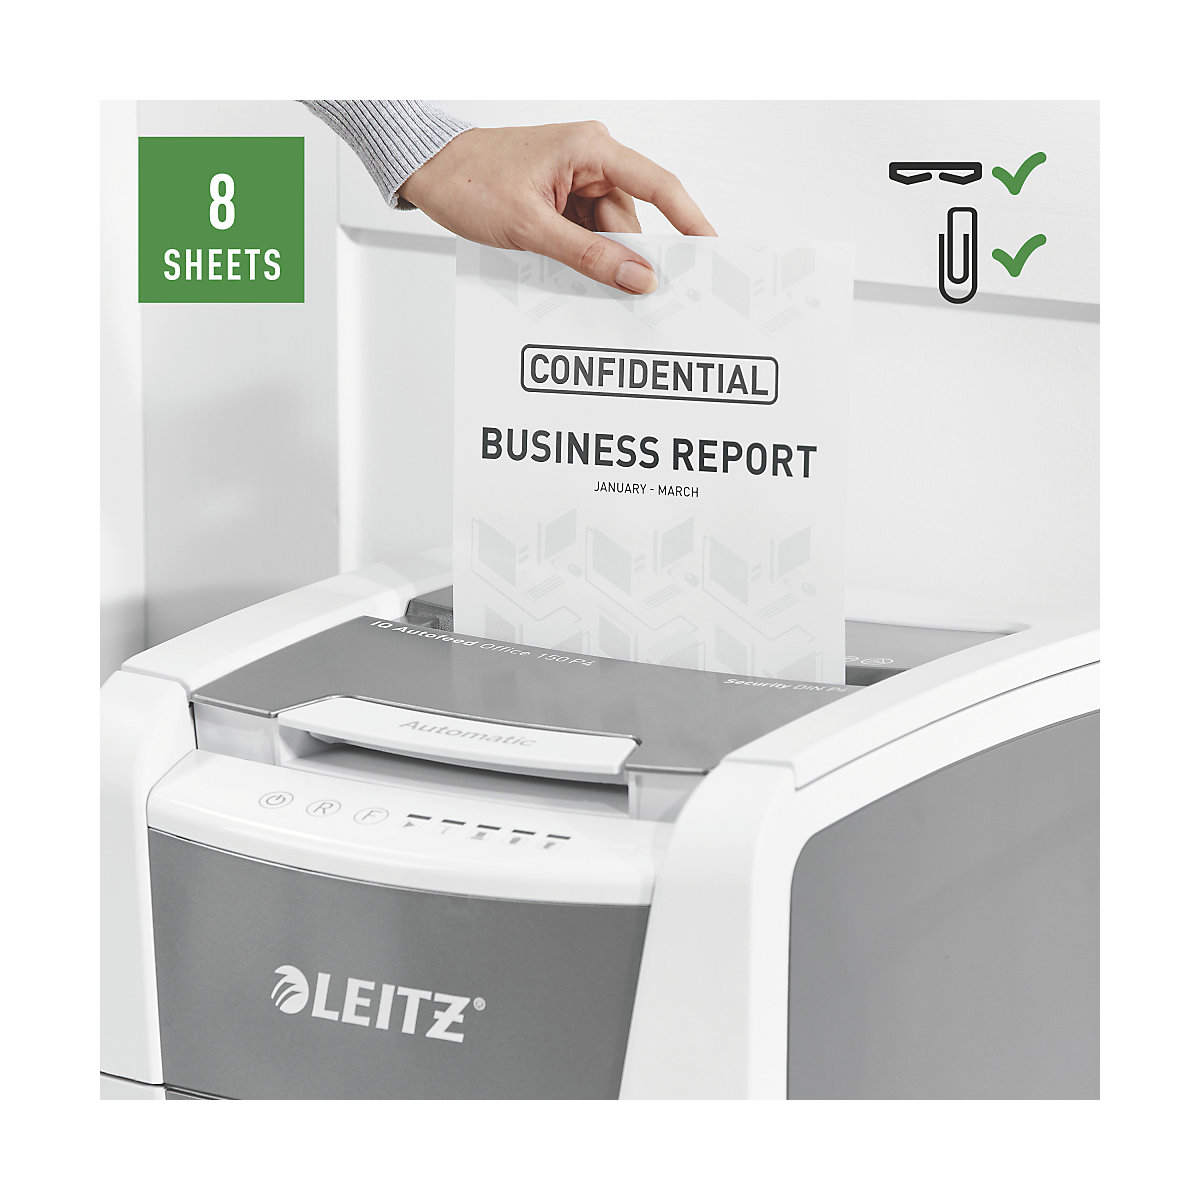 Skartovačka IQ Autofeed Office 150 – Leitz (Obrázek výrobku 5)-4